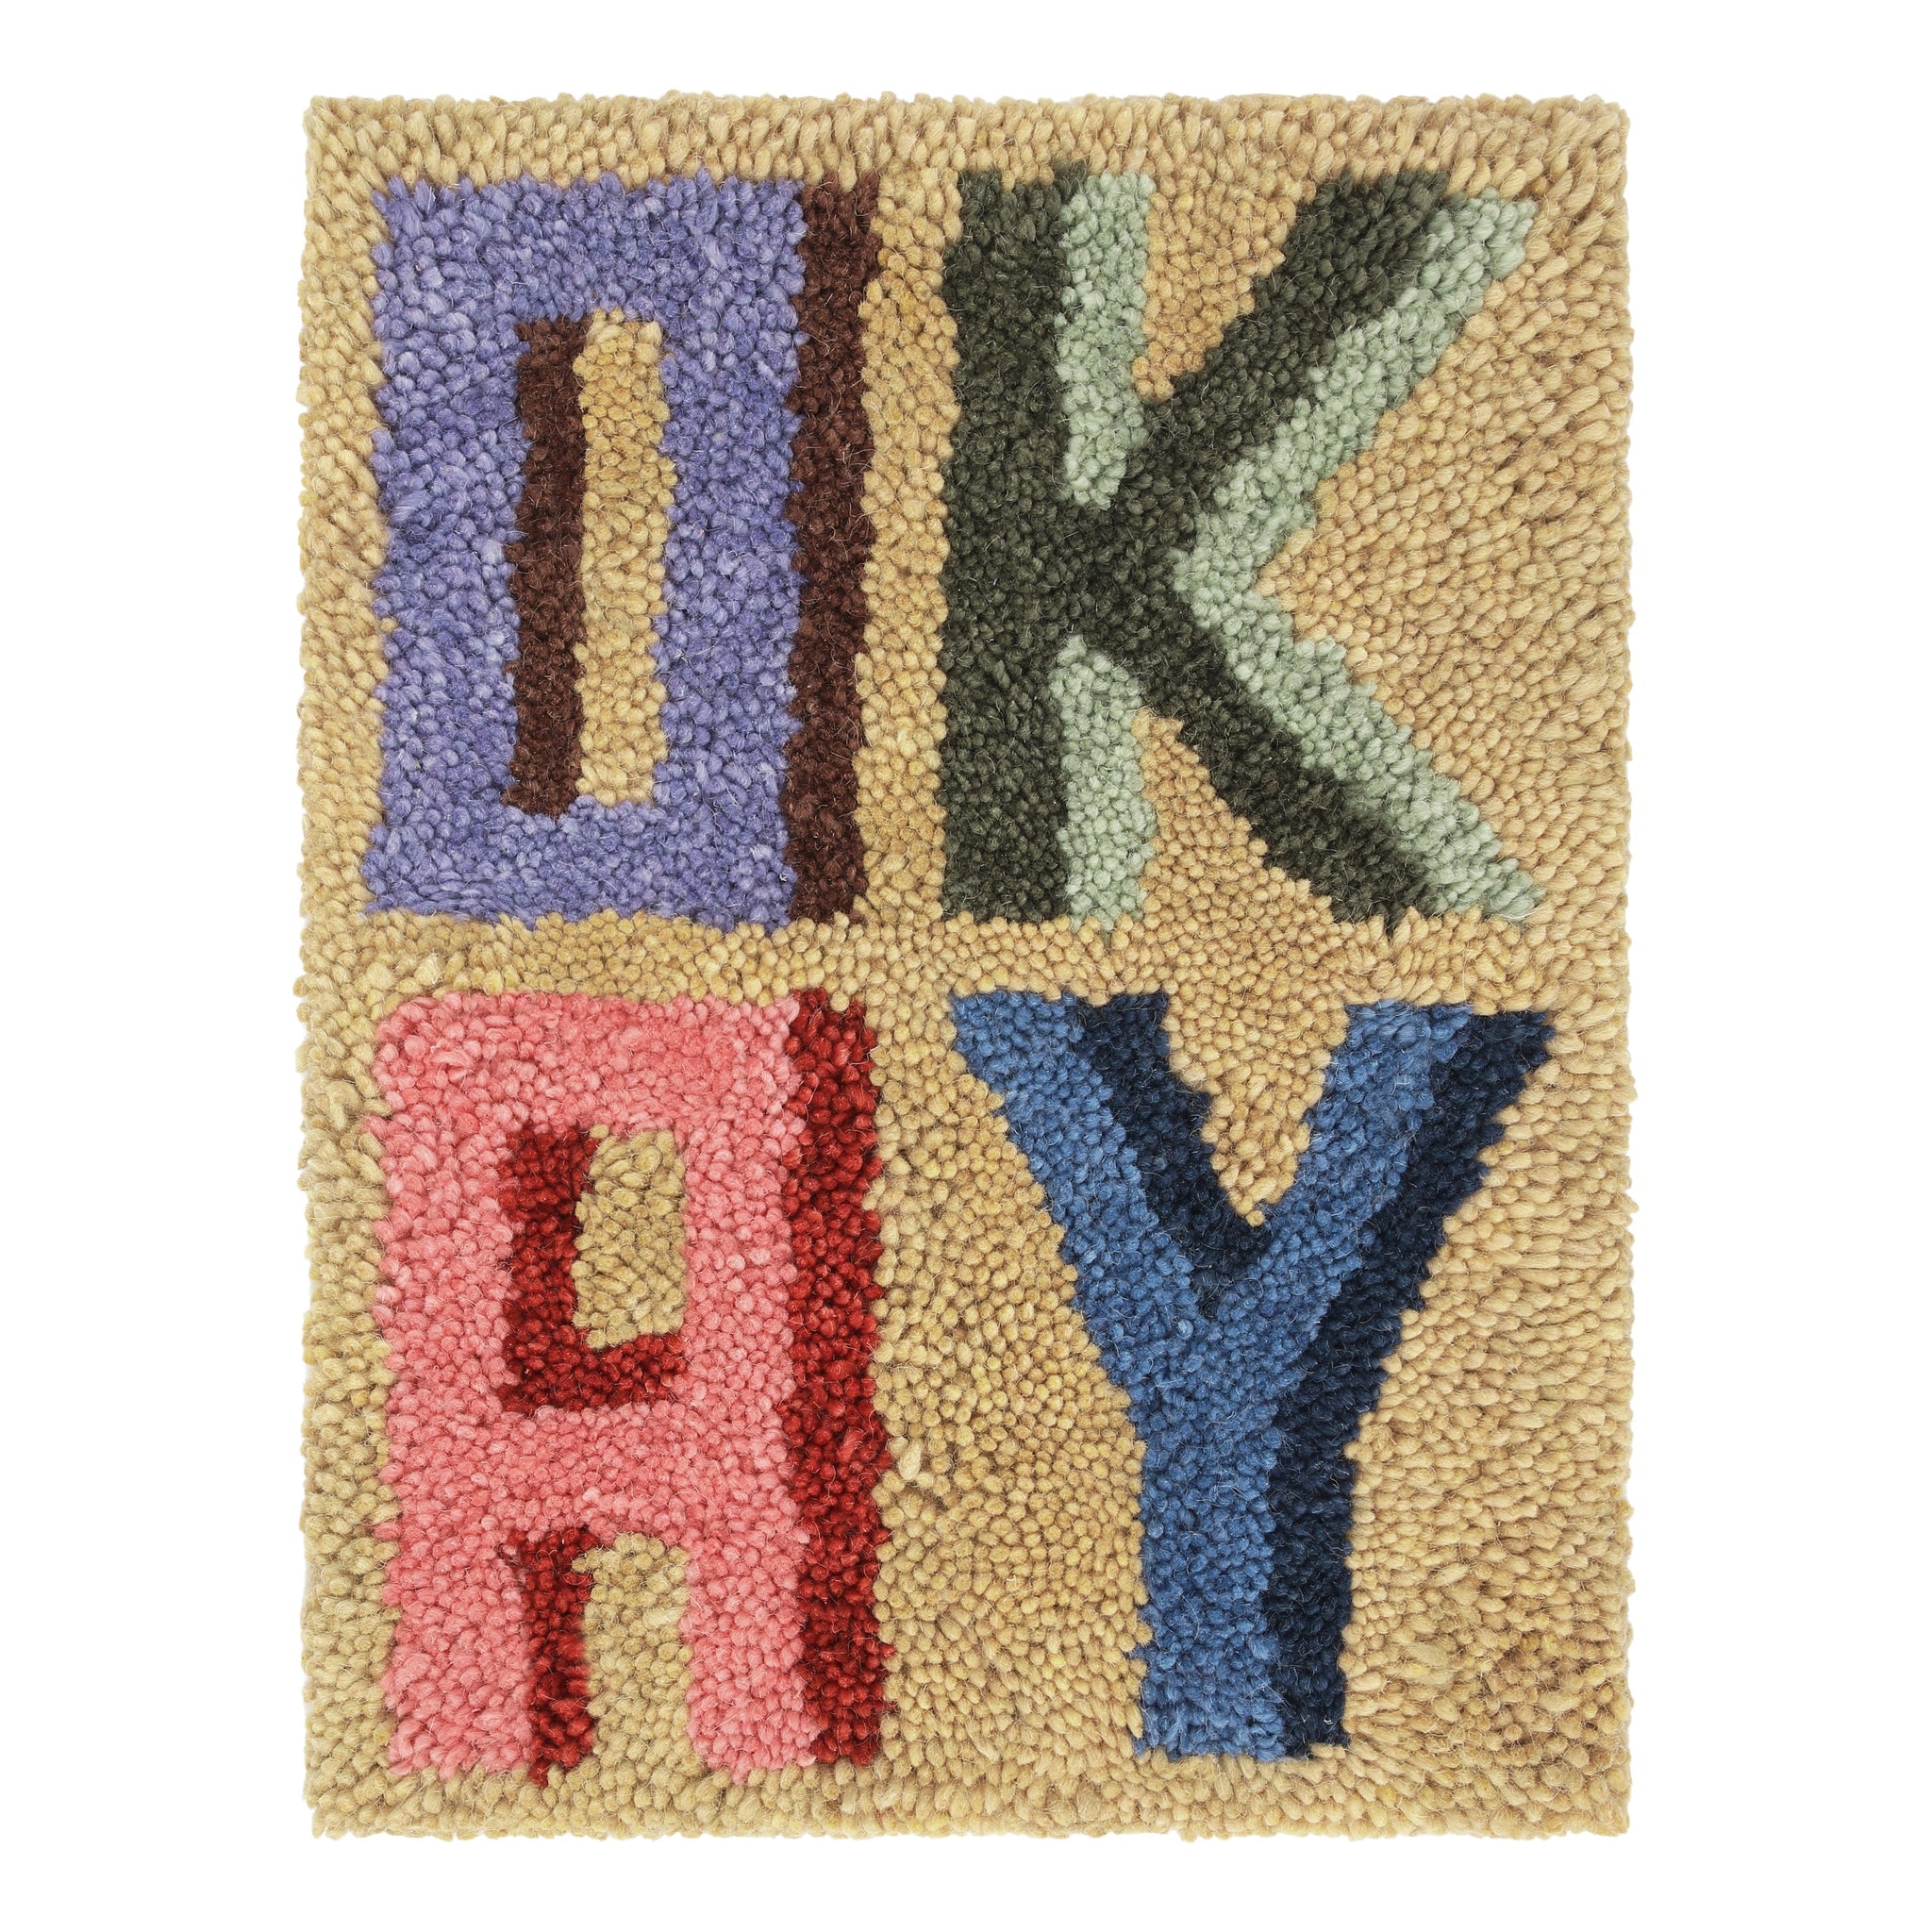 4 letter rug - OKAY